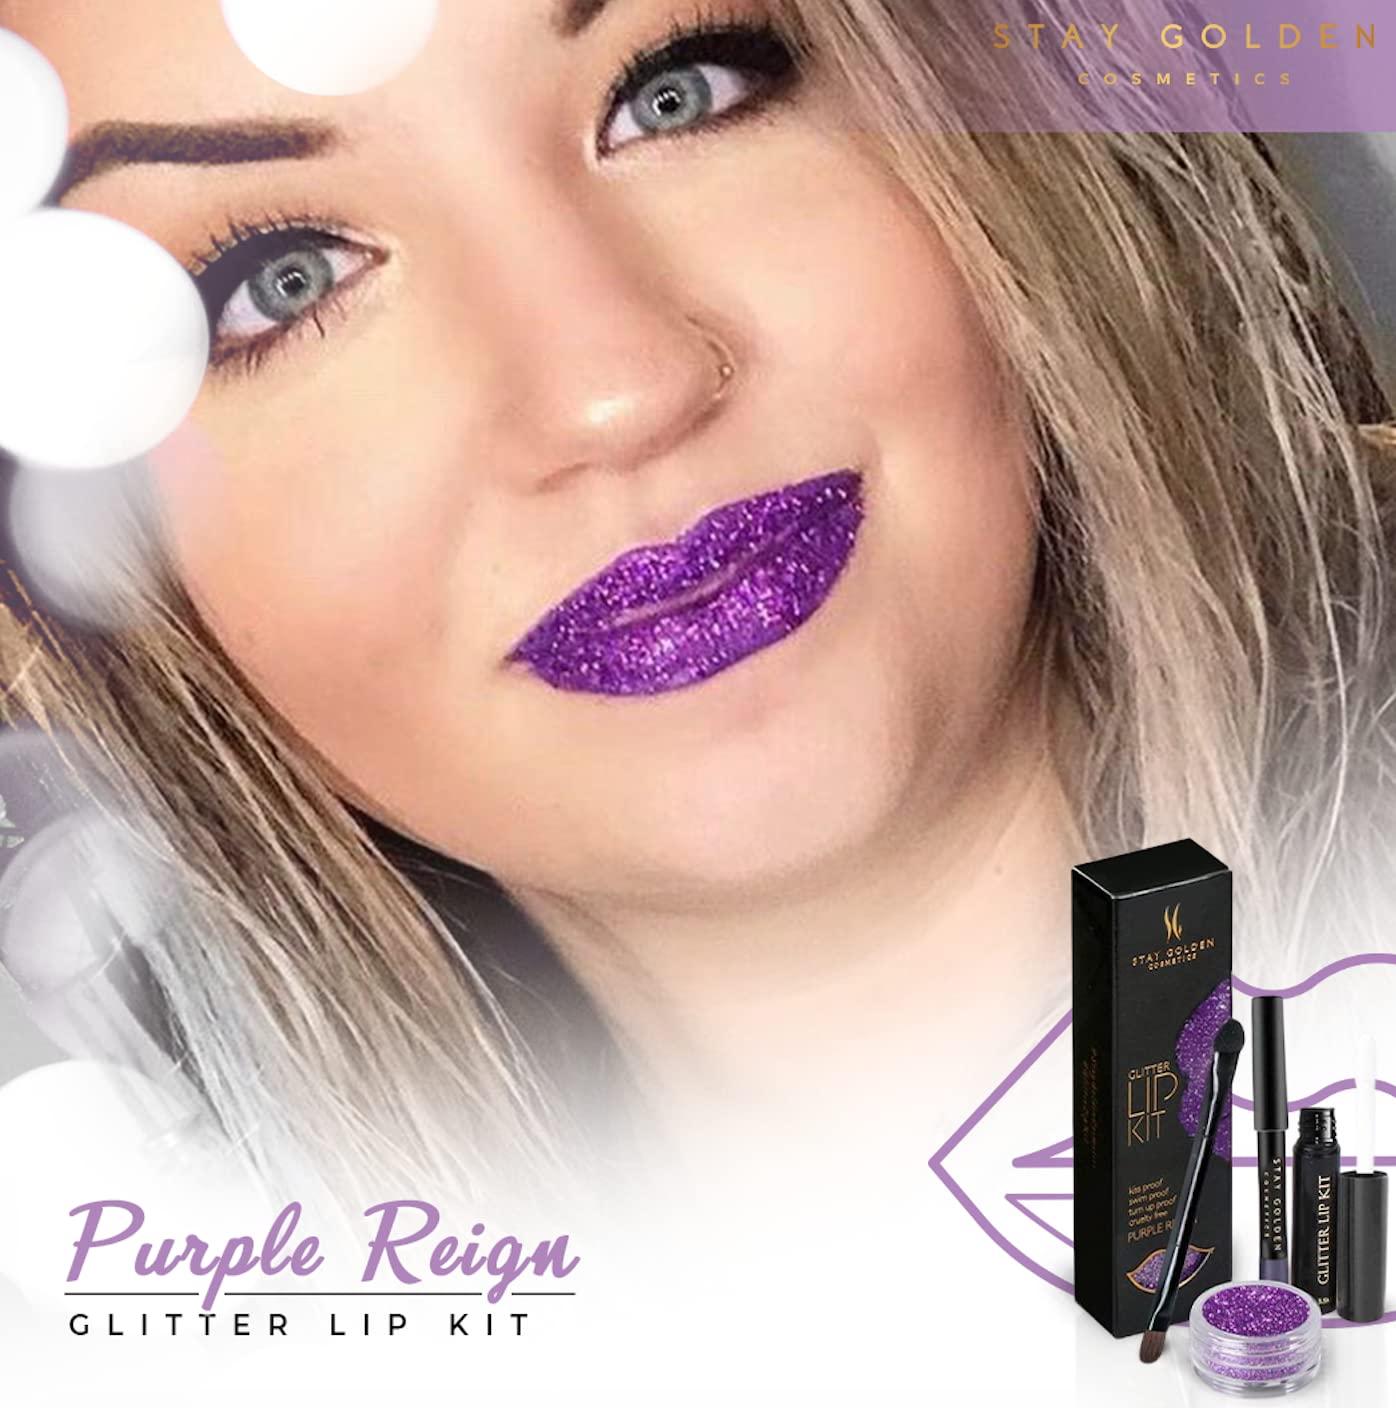 Peachy Glitter Lip Kit - Smudge & Kiss Proof - Stay Golden Cosmetics